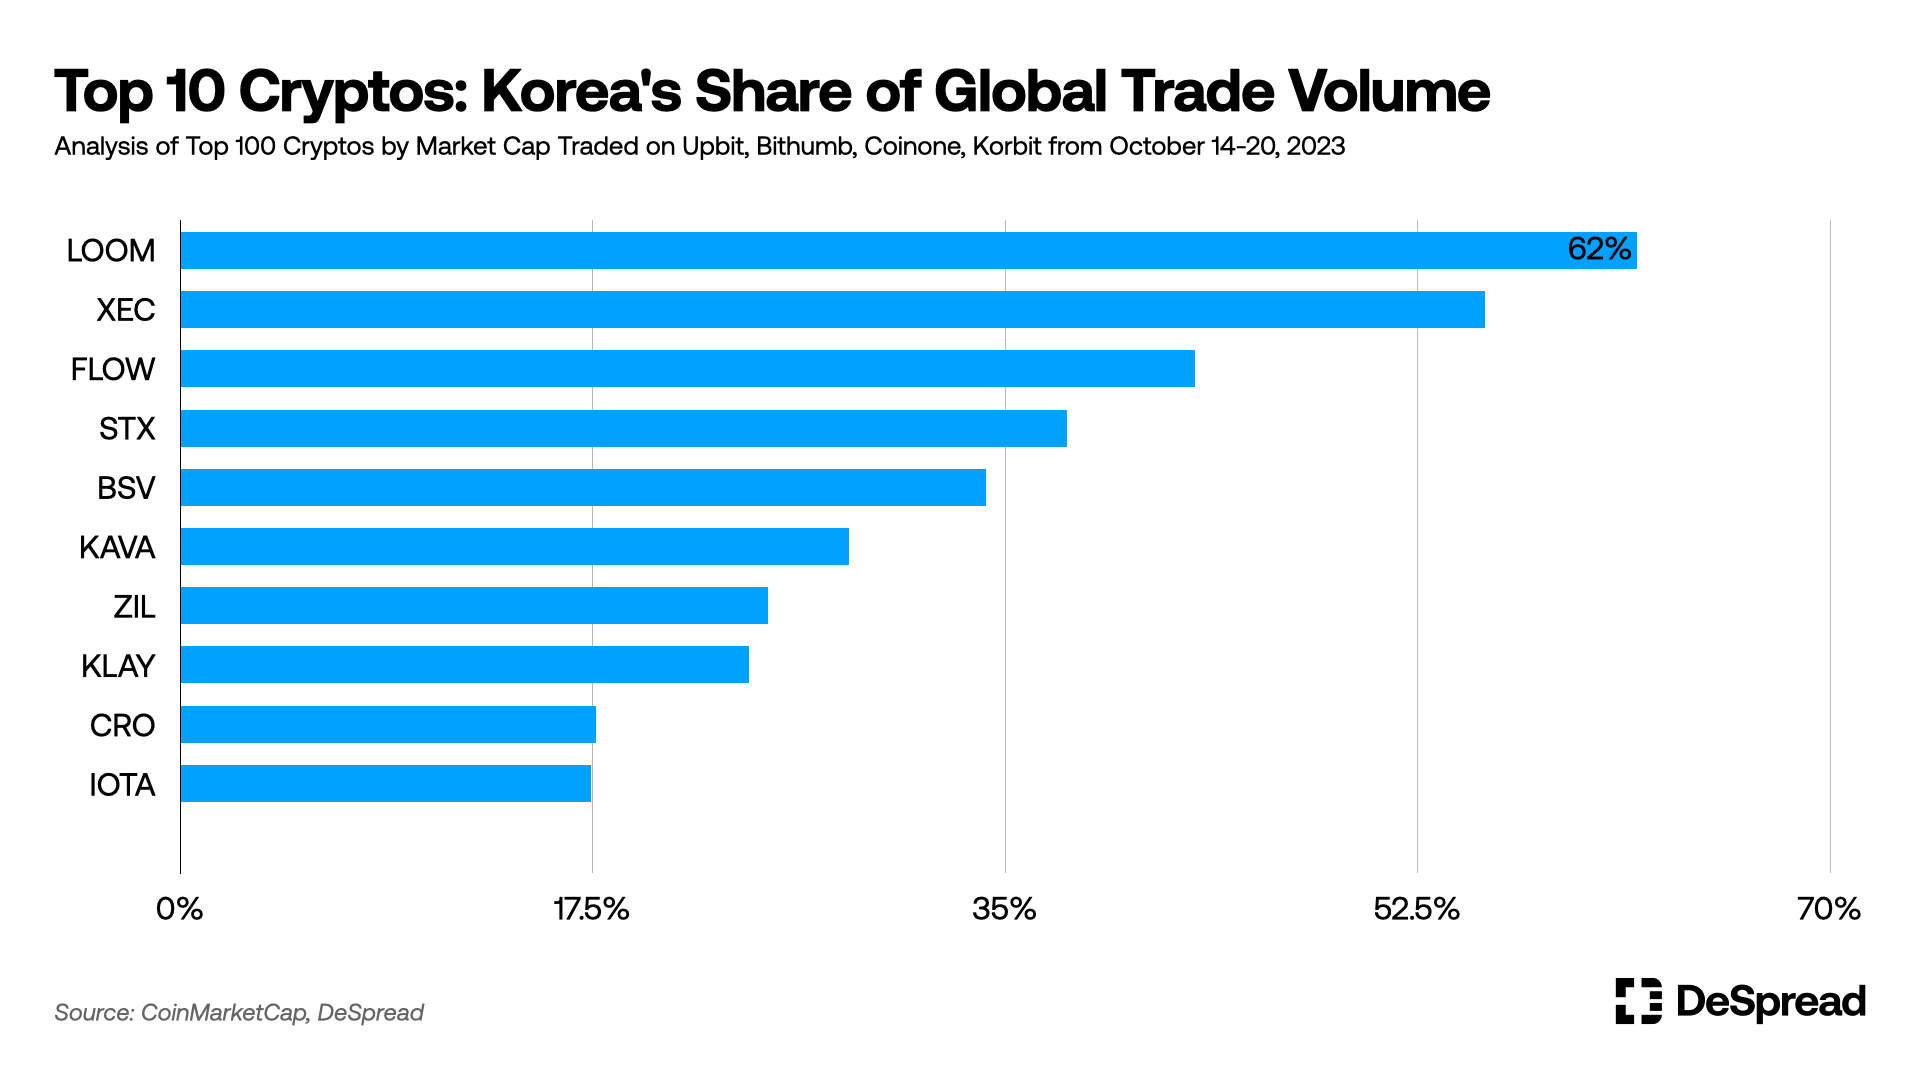 Korea's crypto share of global trading volume: